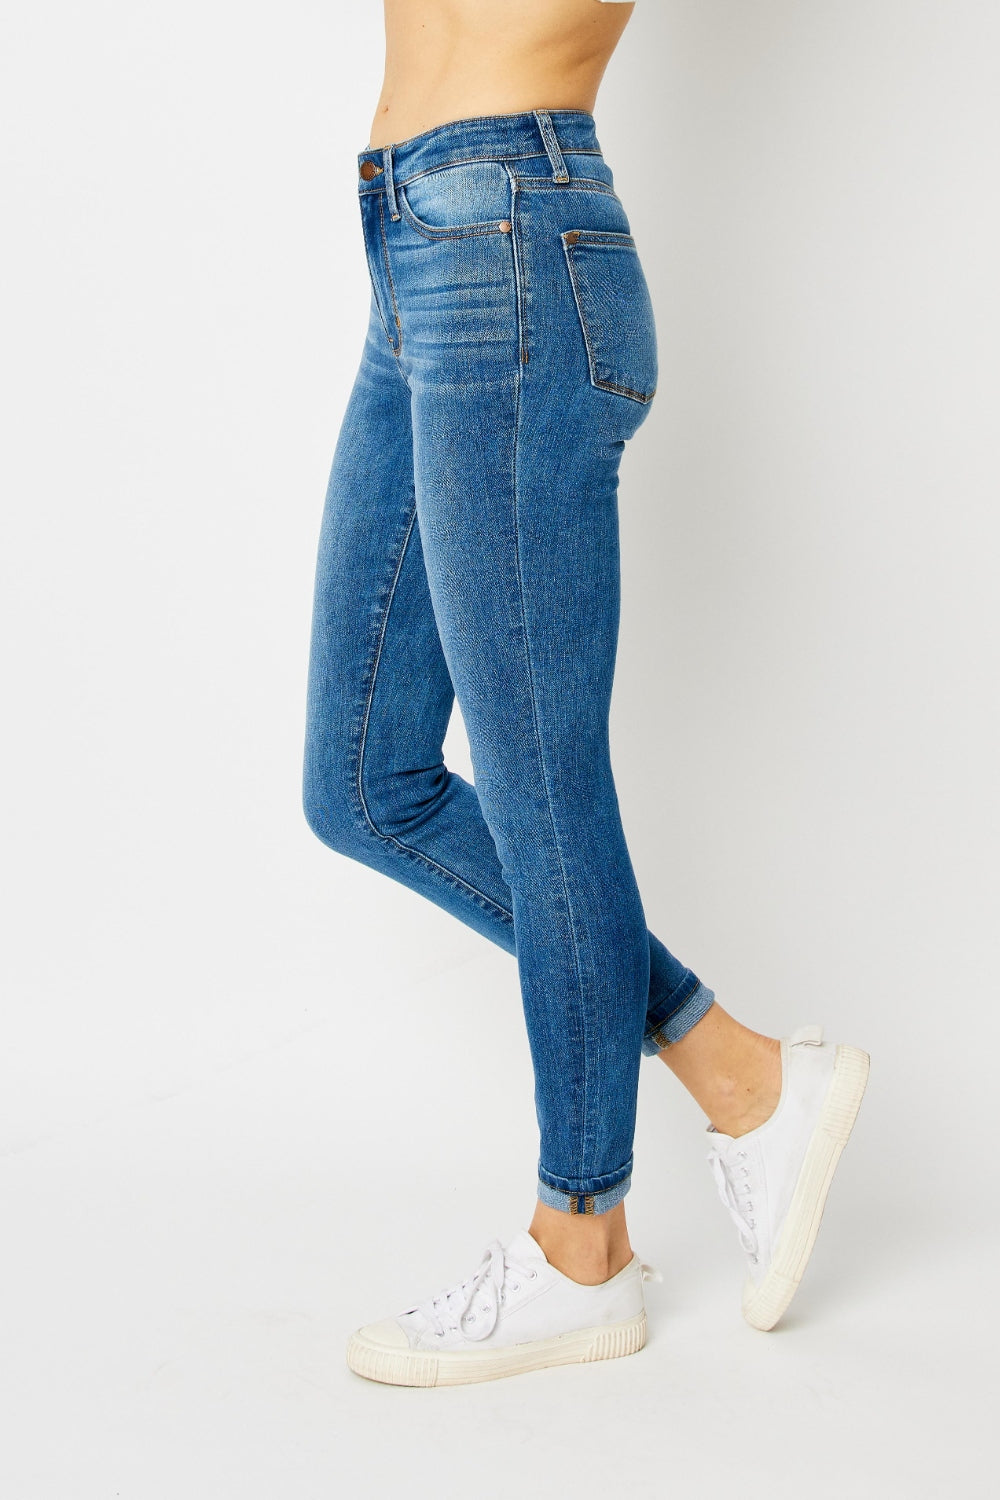 Judy Blue Full Size Skinny Jeans with Stylish Cuffed Hem